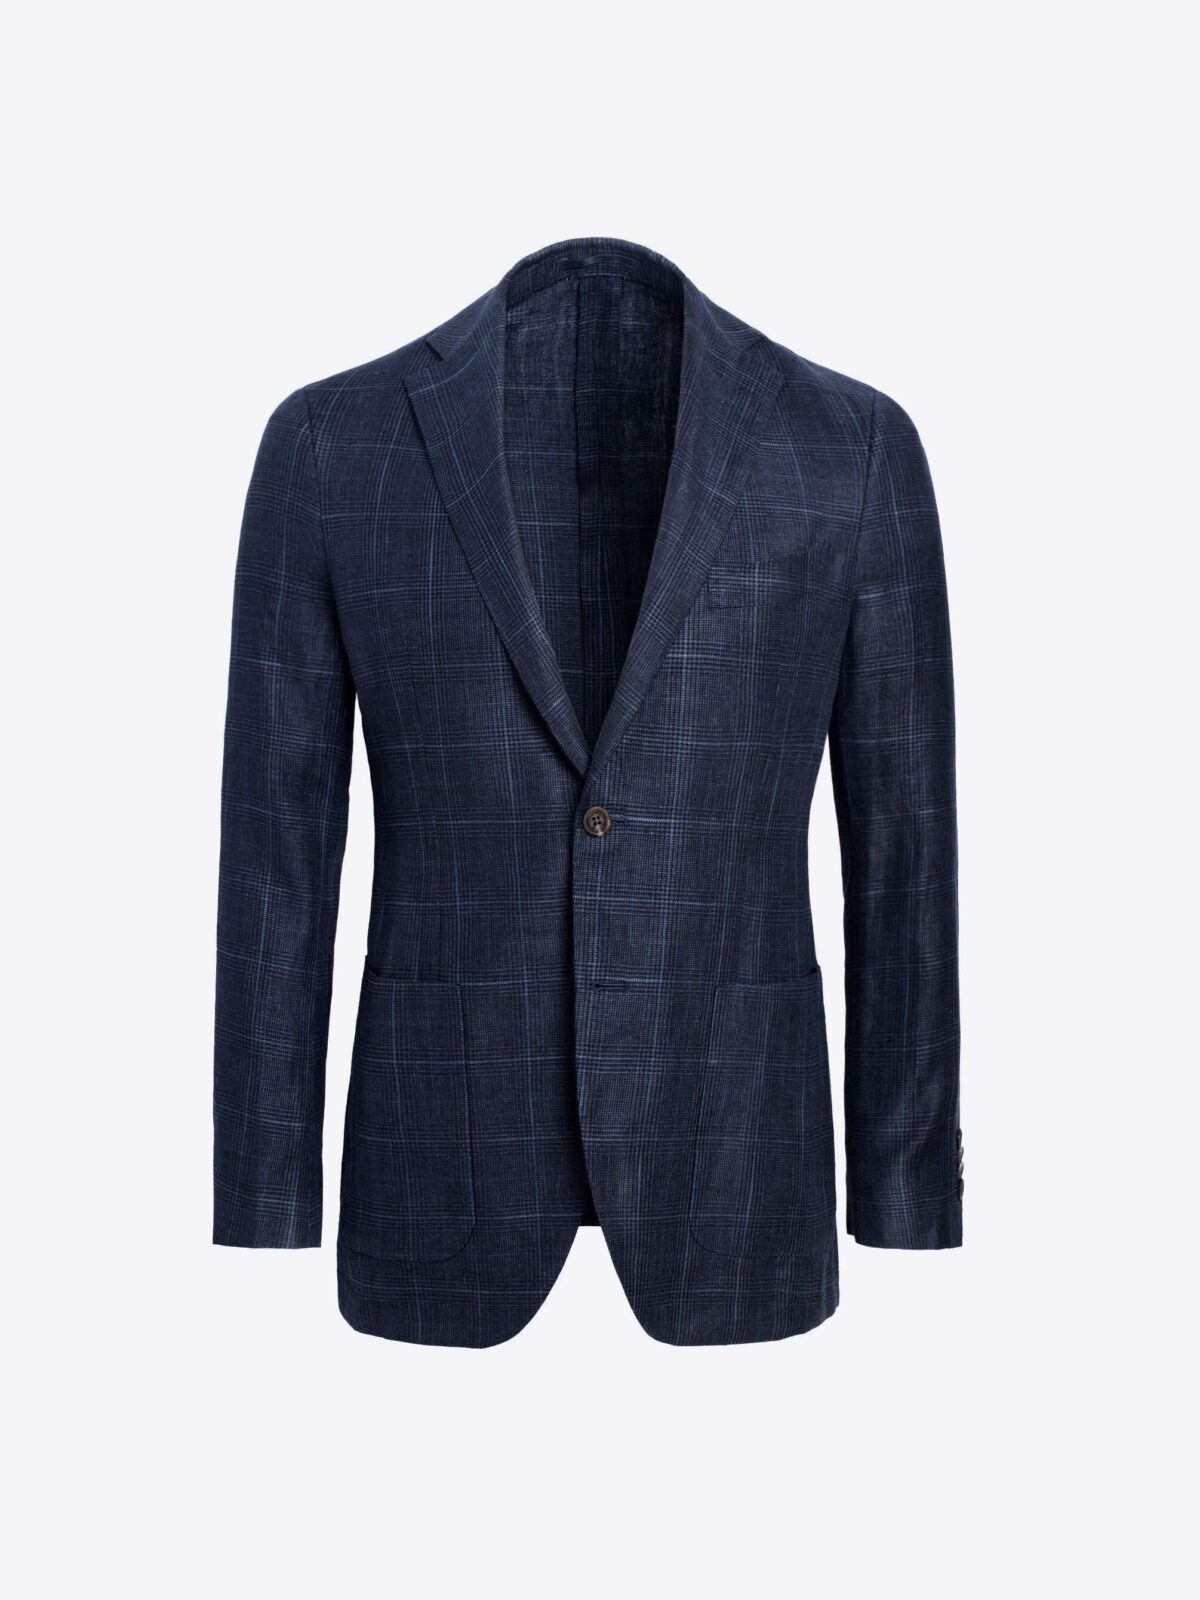 The Best Wool Silk Linen blends for a standout jacket - Officine Paladino